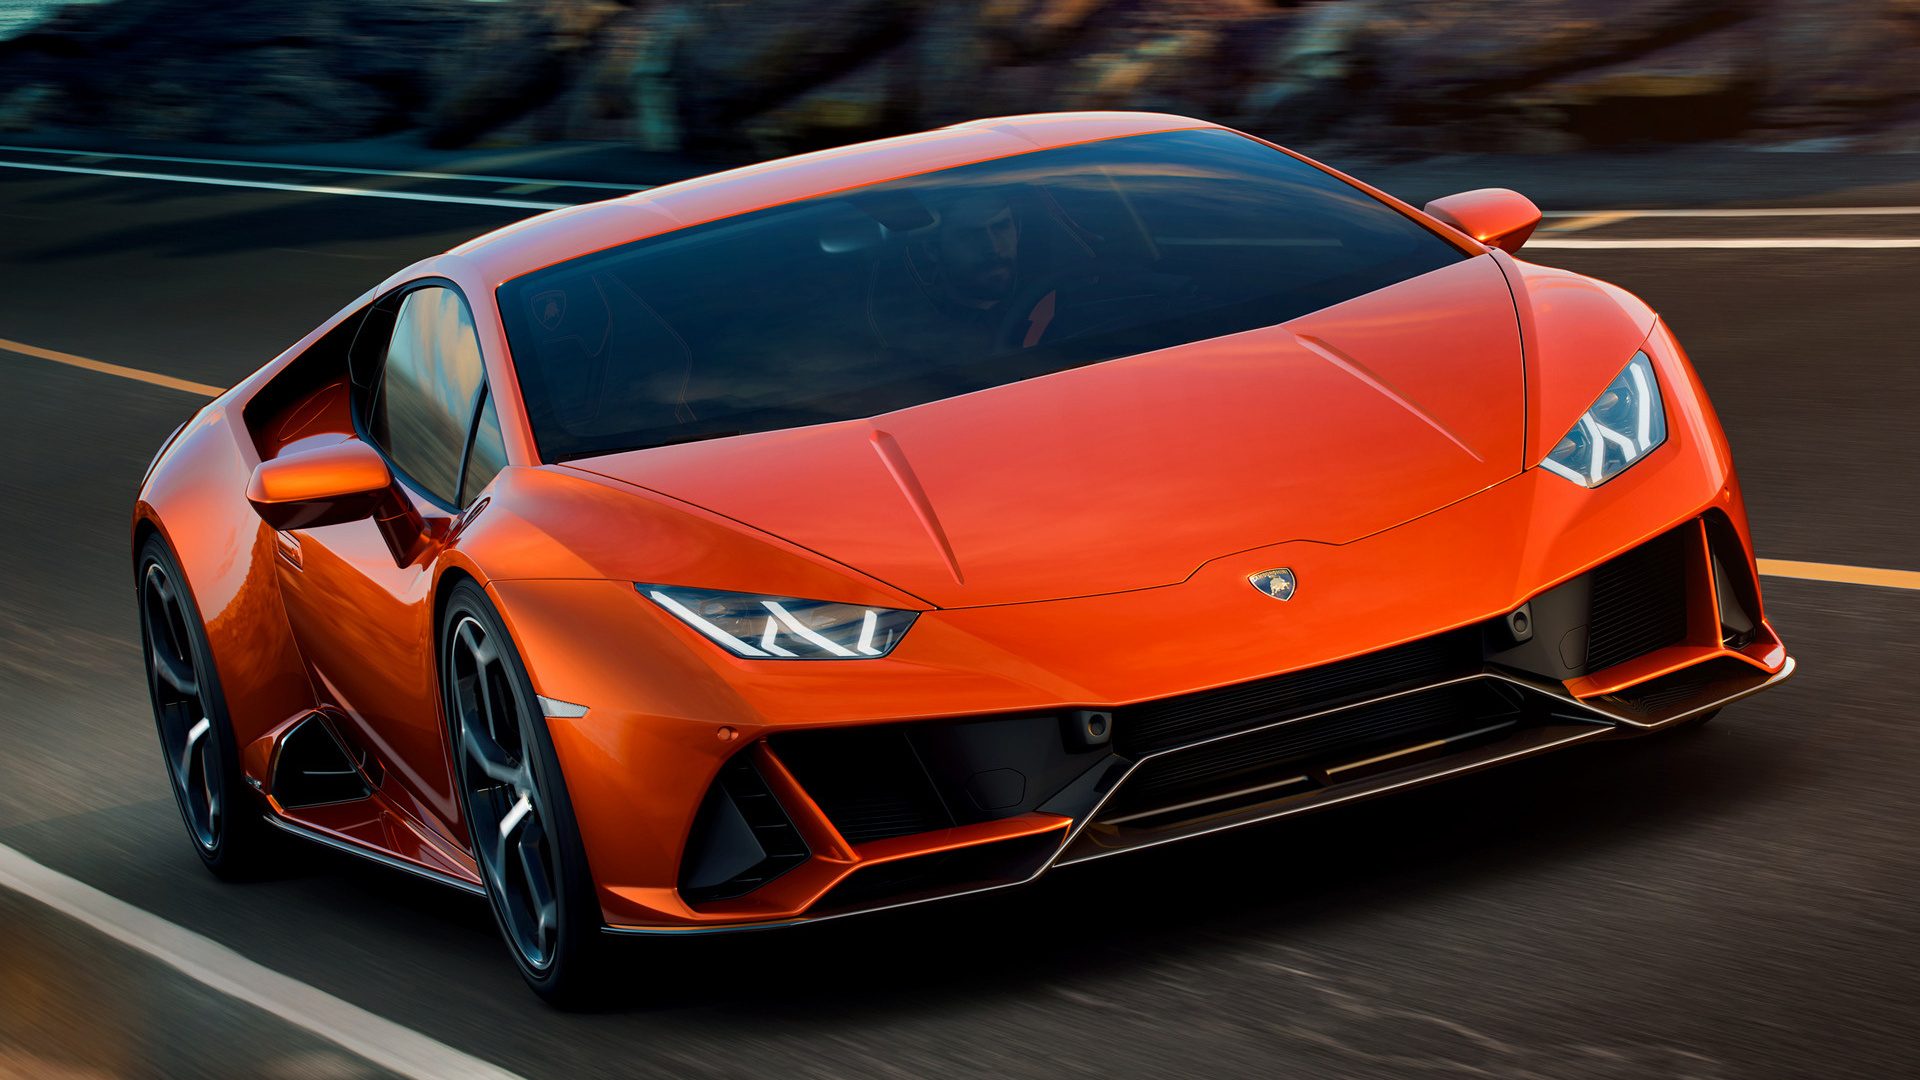 2019 Lamborghini Huracan Evo - Wallpapers and HD Images ...